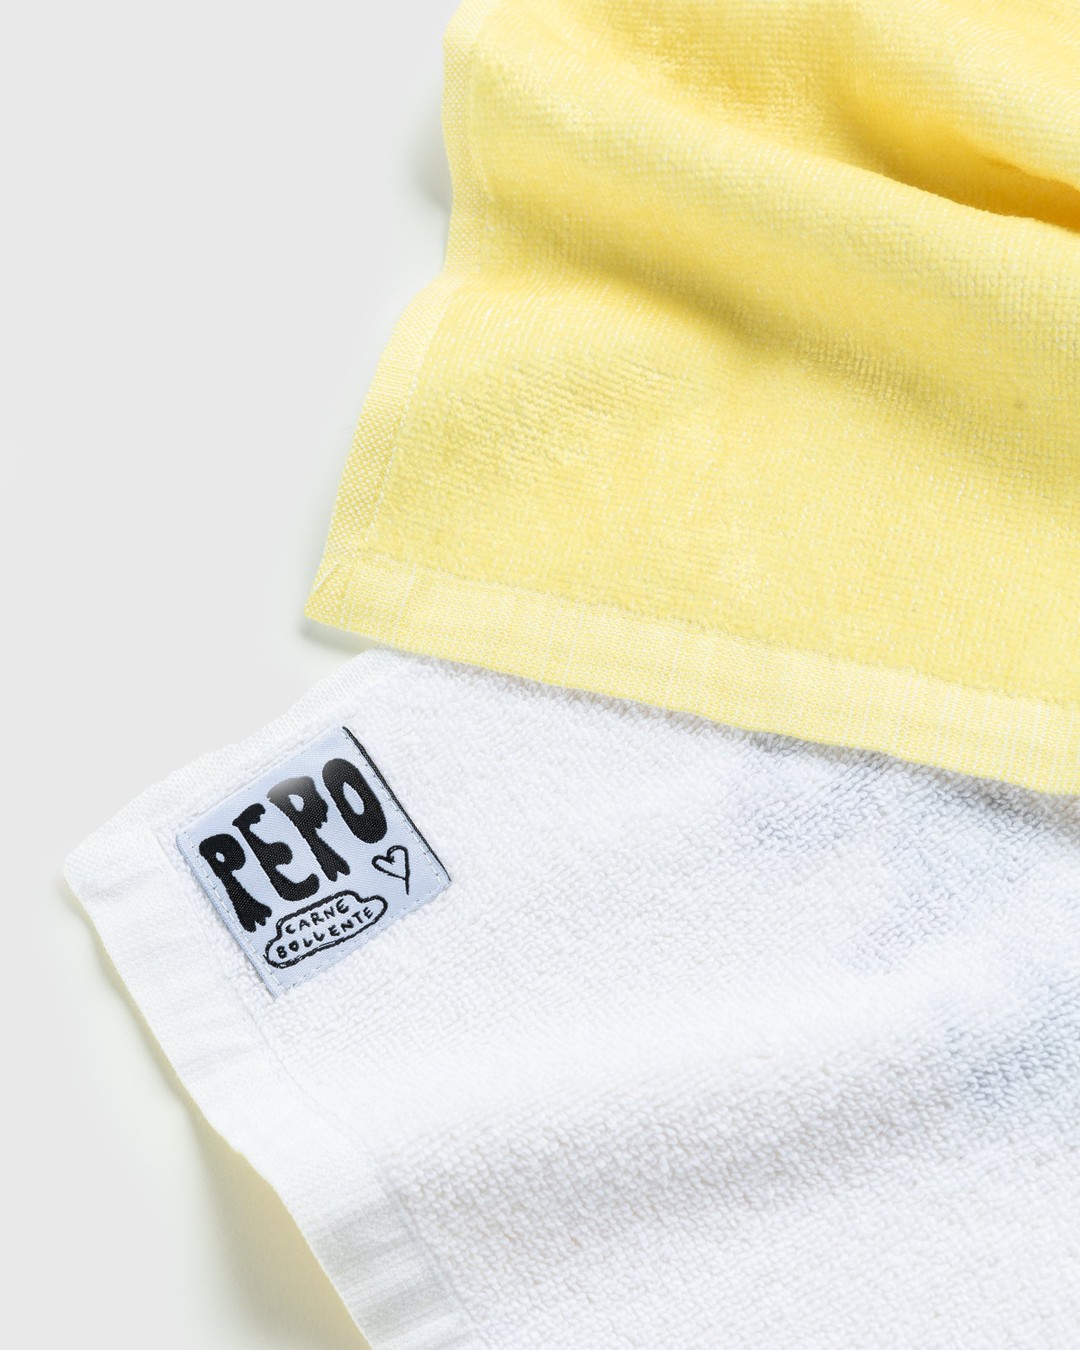 Carne Bollente – Pepo's Dream Towel Multi - Towels - Brown - Image 3